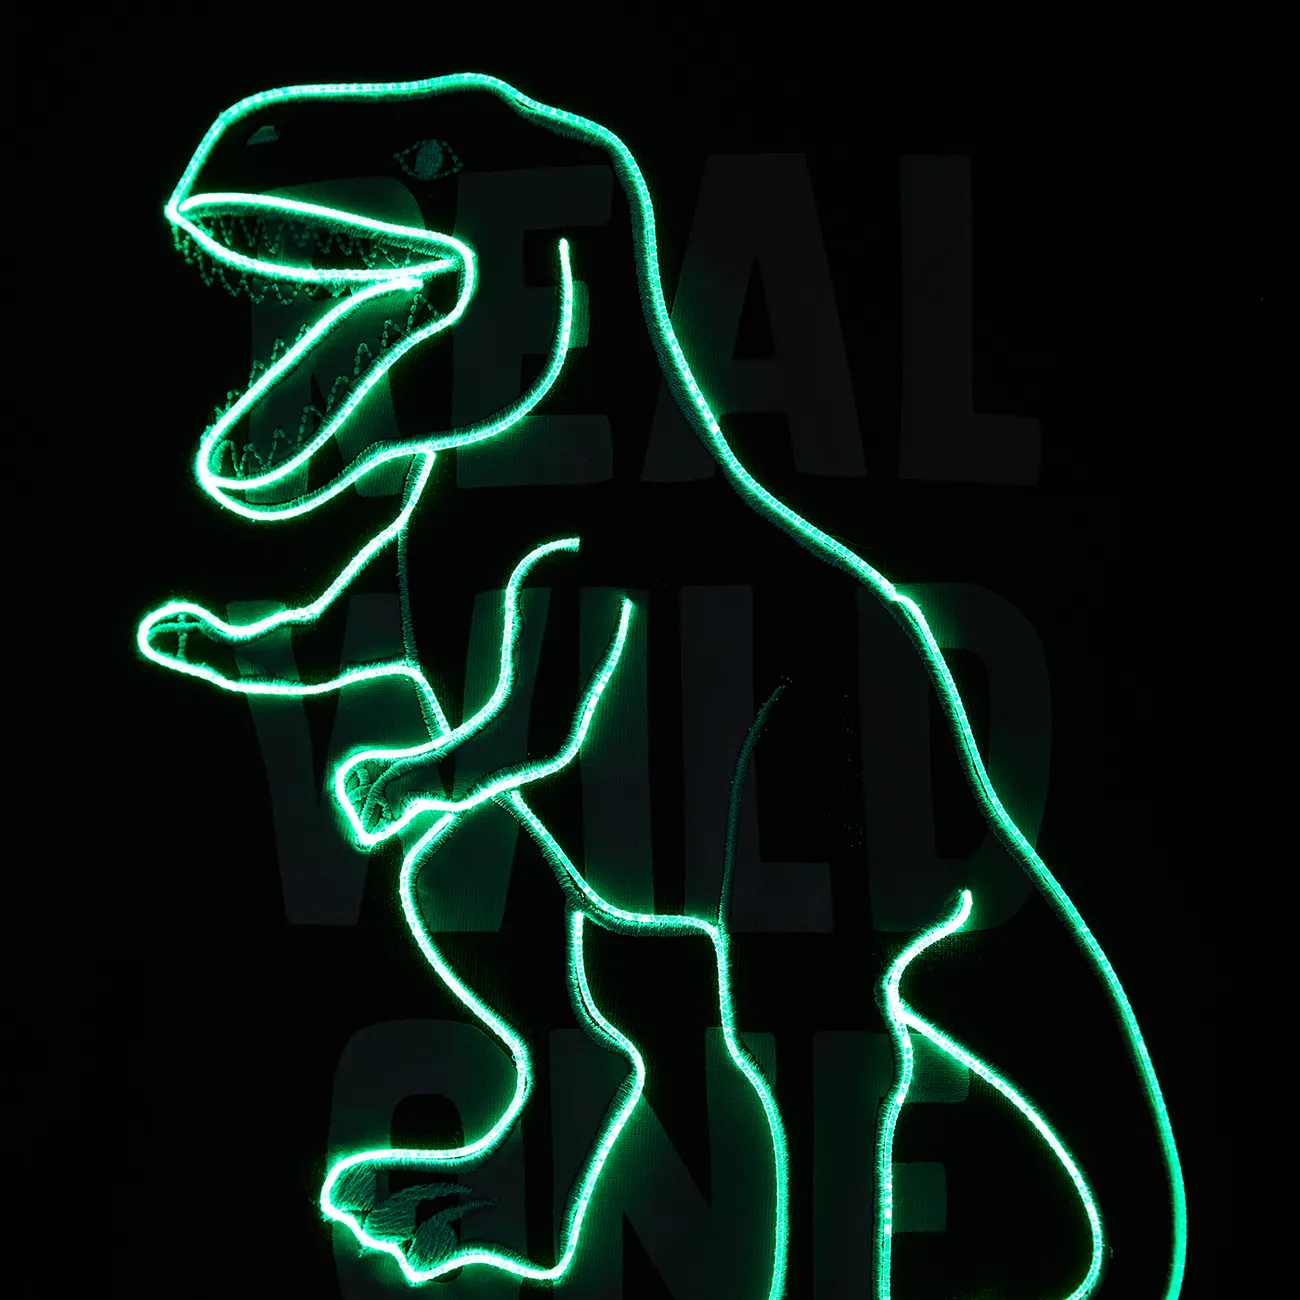 Go-Glow Illuminating Sweatshirt with Light Up Dinosaur Pattern Including Controller (Built-In Battery) Black big image 1